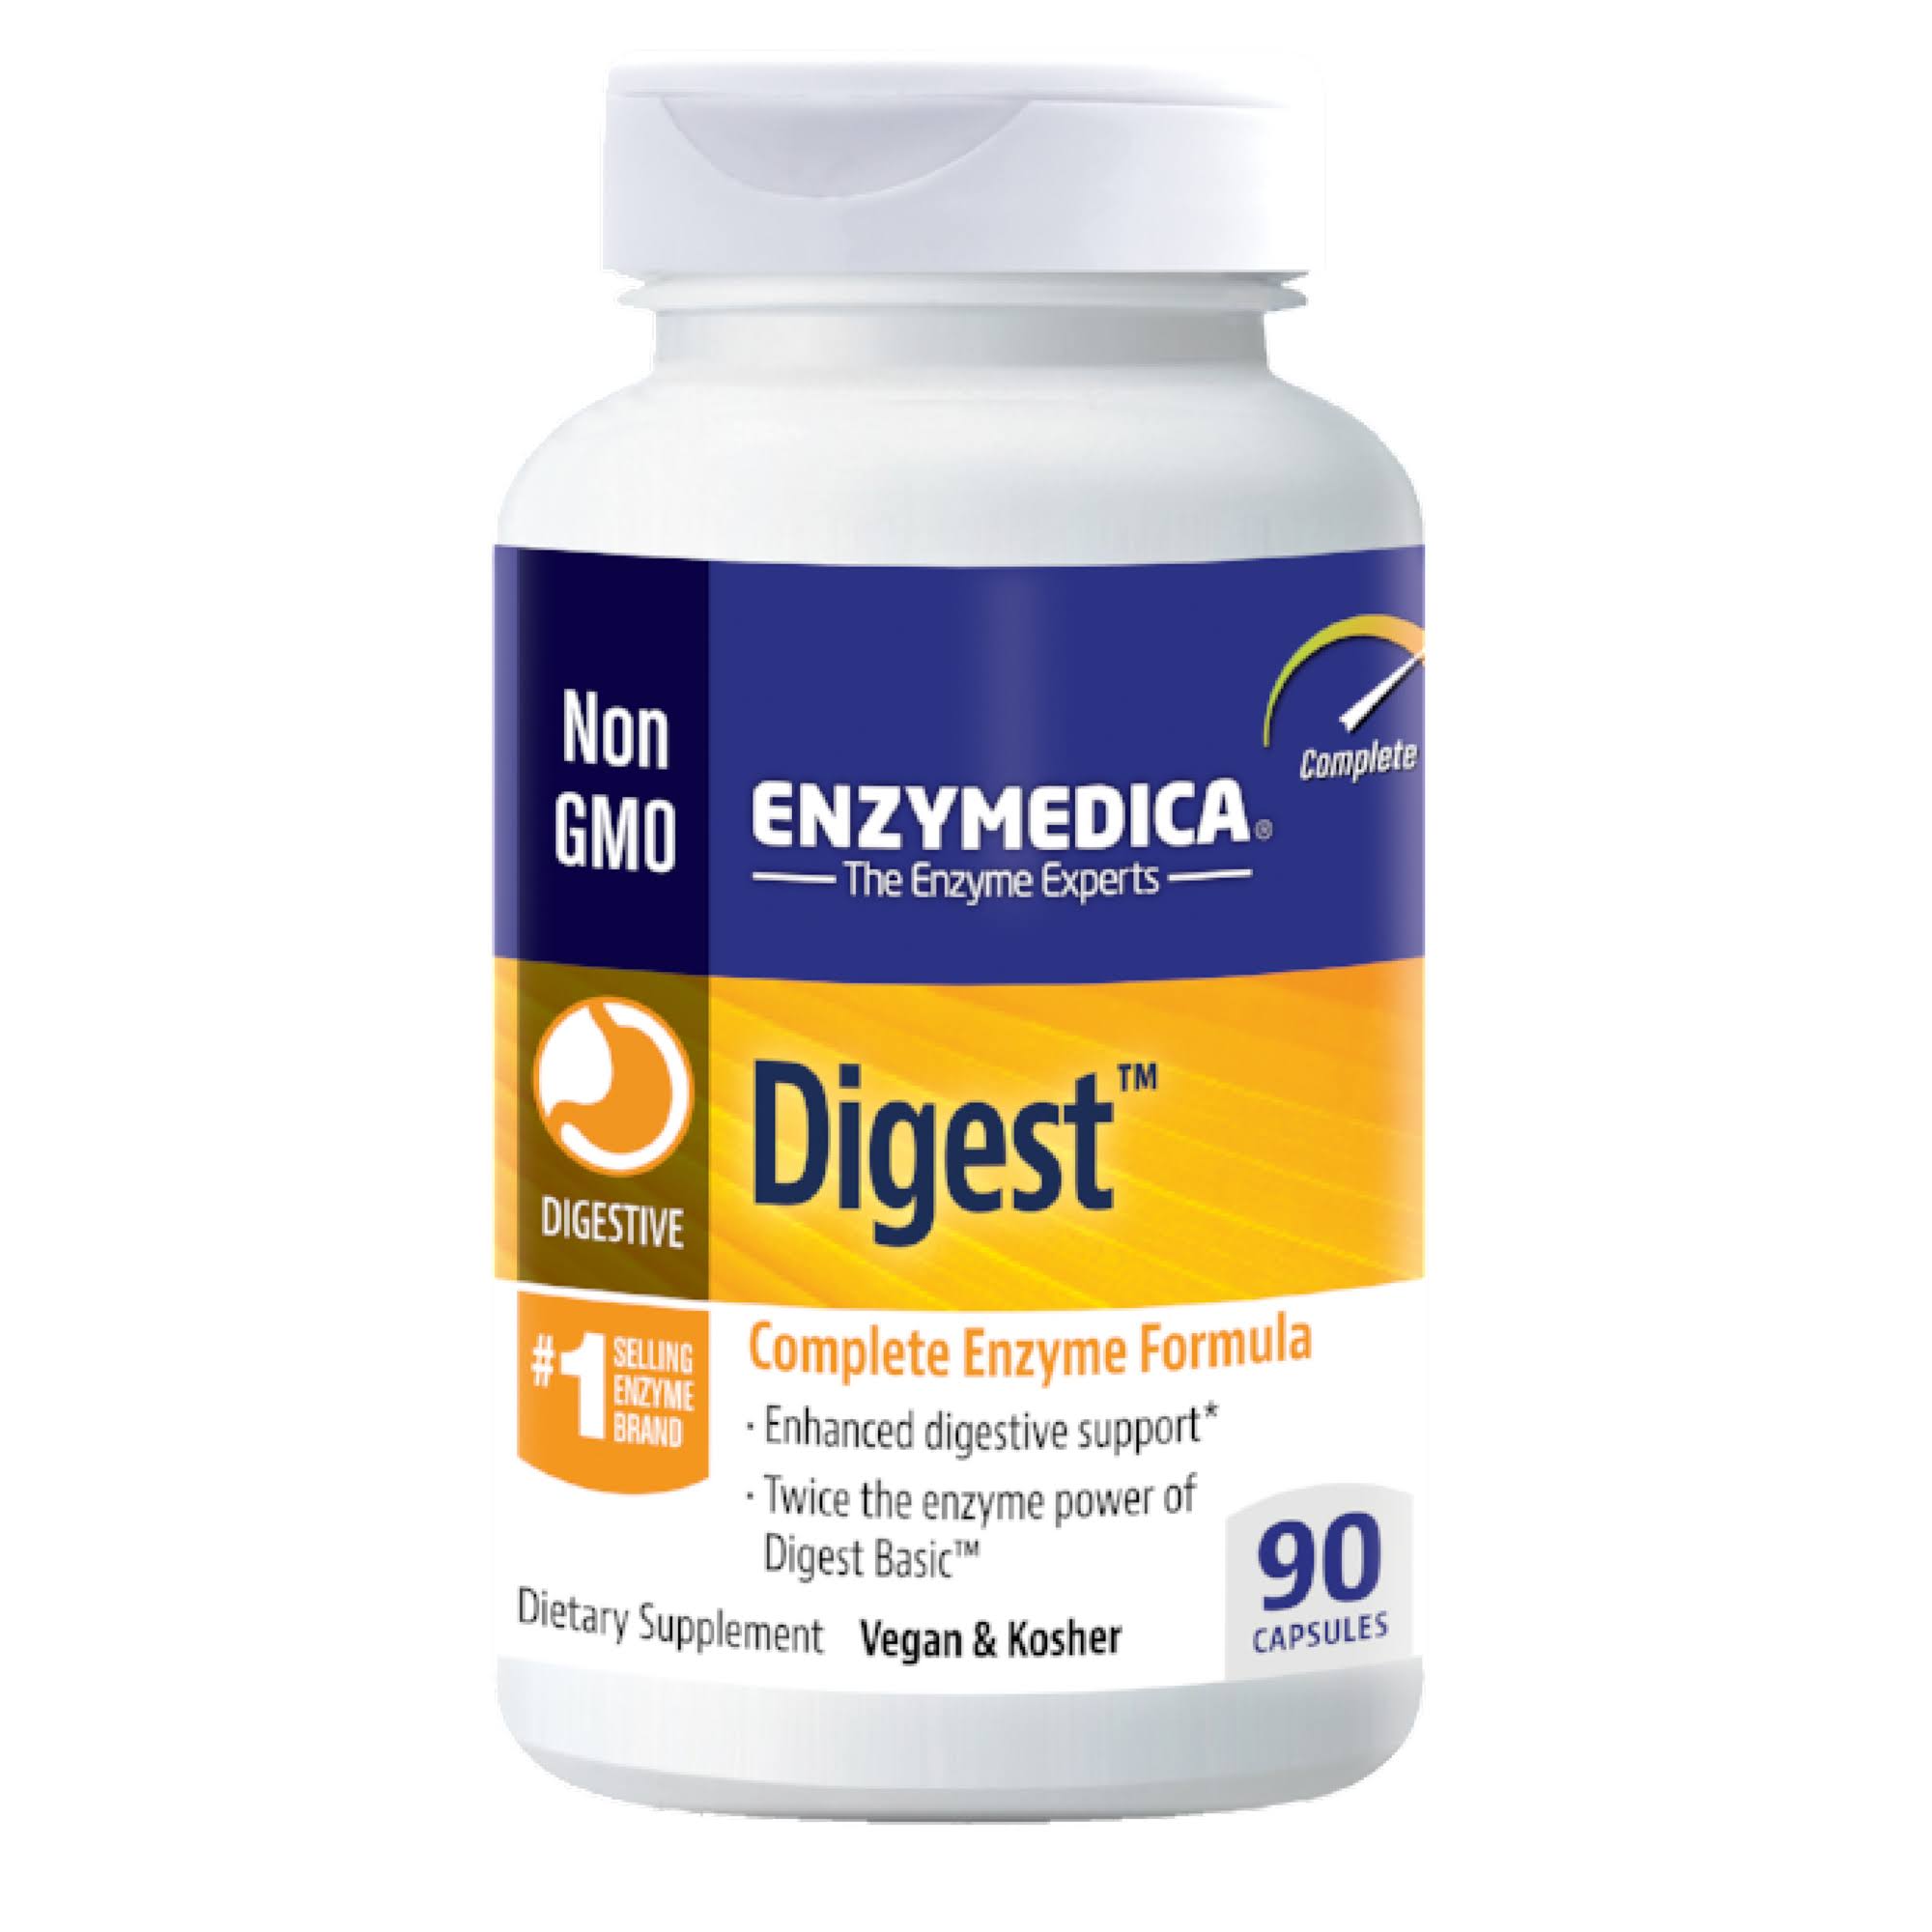 Enzymedica Digest, Capsules - 90 capsules